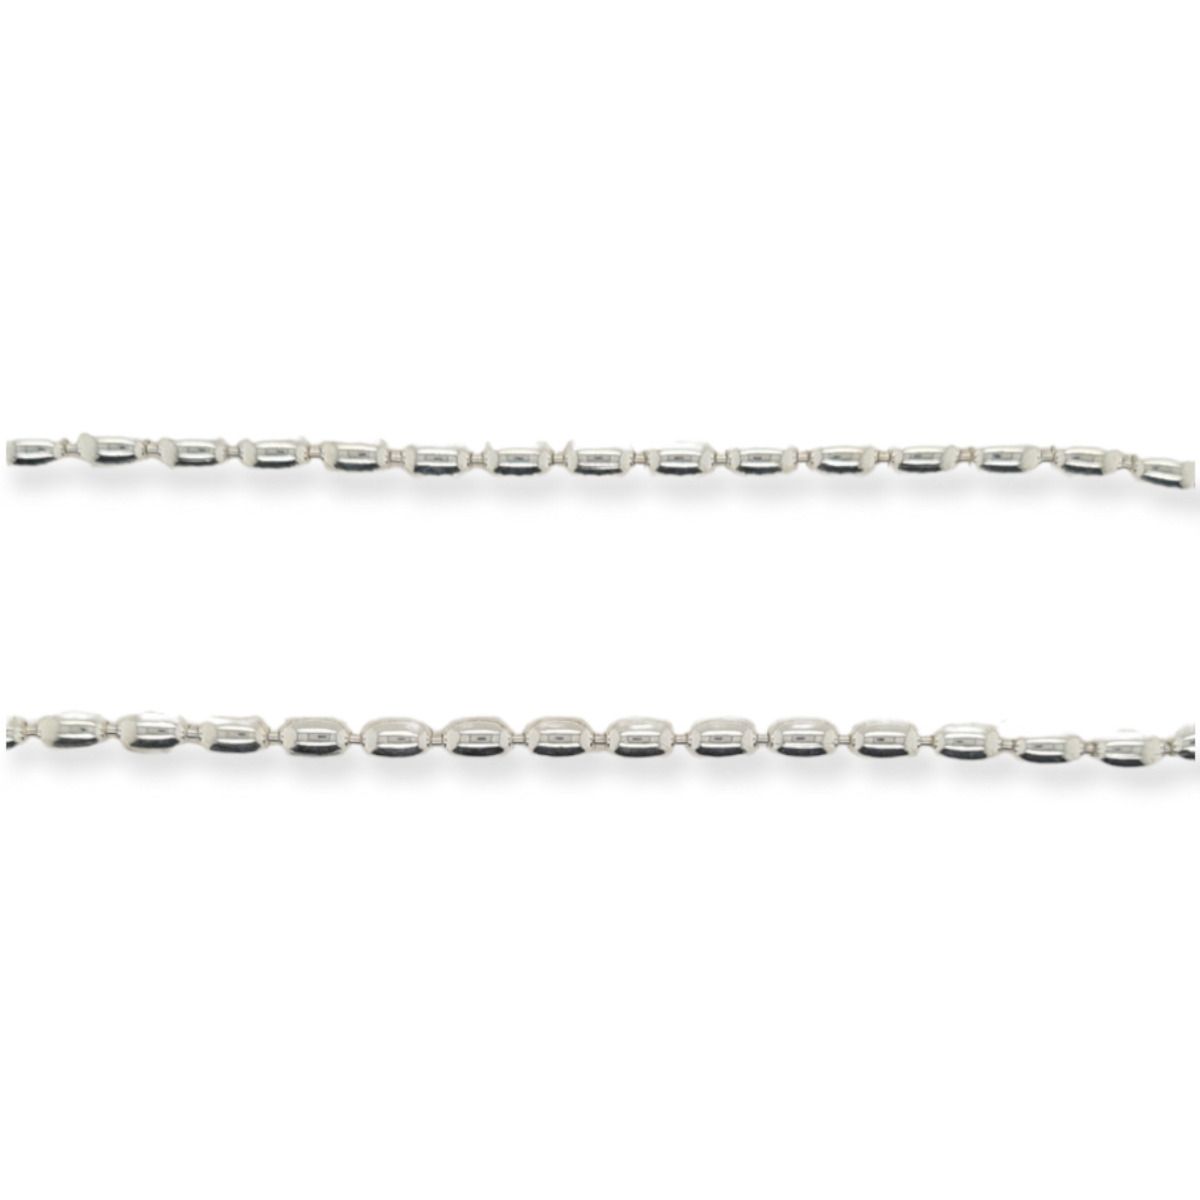 MCJ Rice Bead Chain in Sterling Silver - 60cm